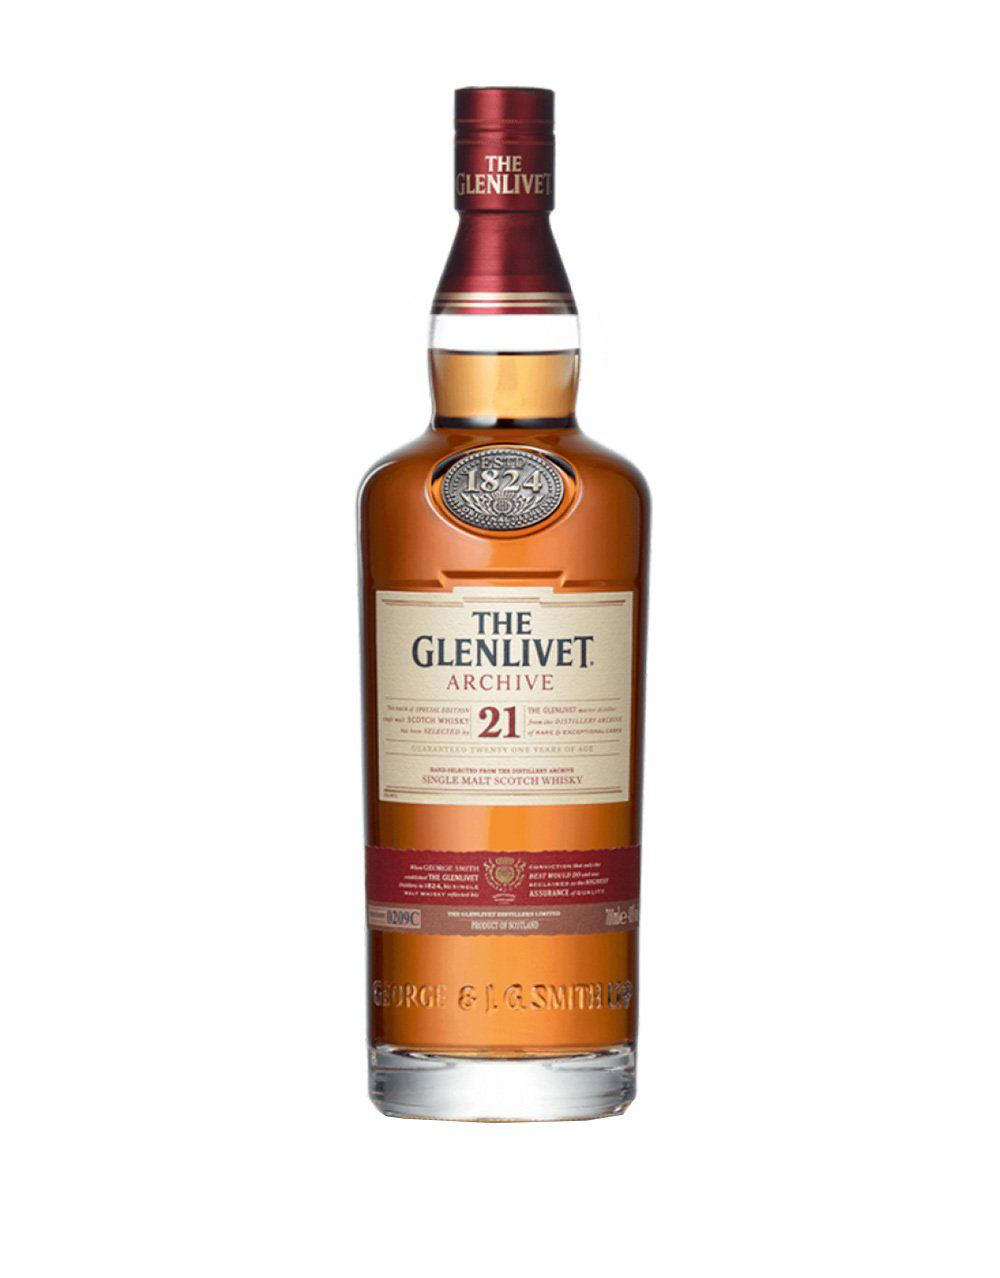 The Glenlivet 21 Year Old Single Malt Scotch Whisky